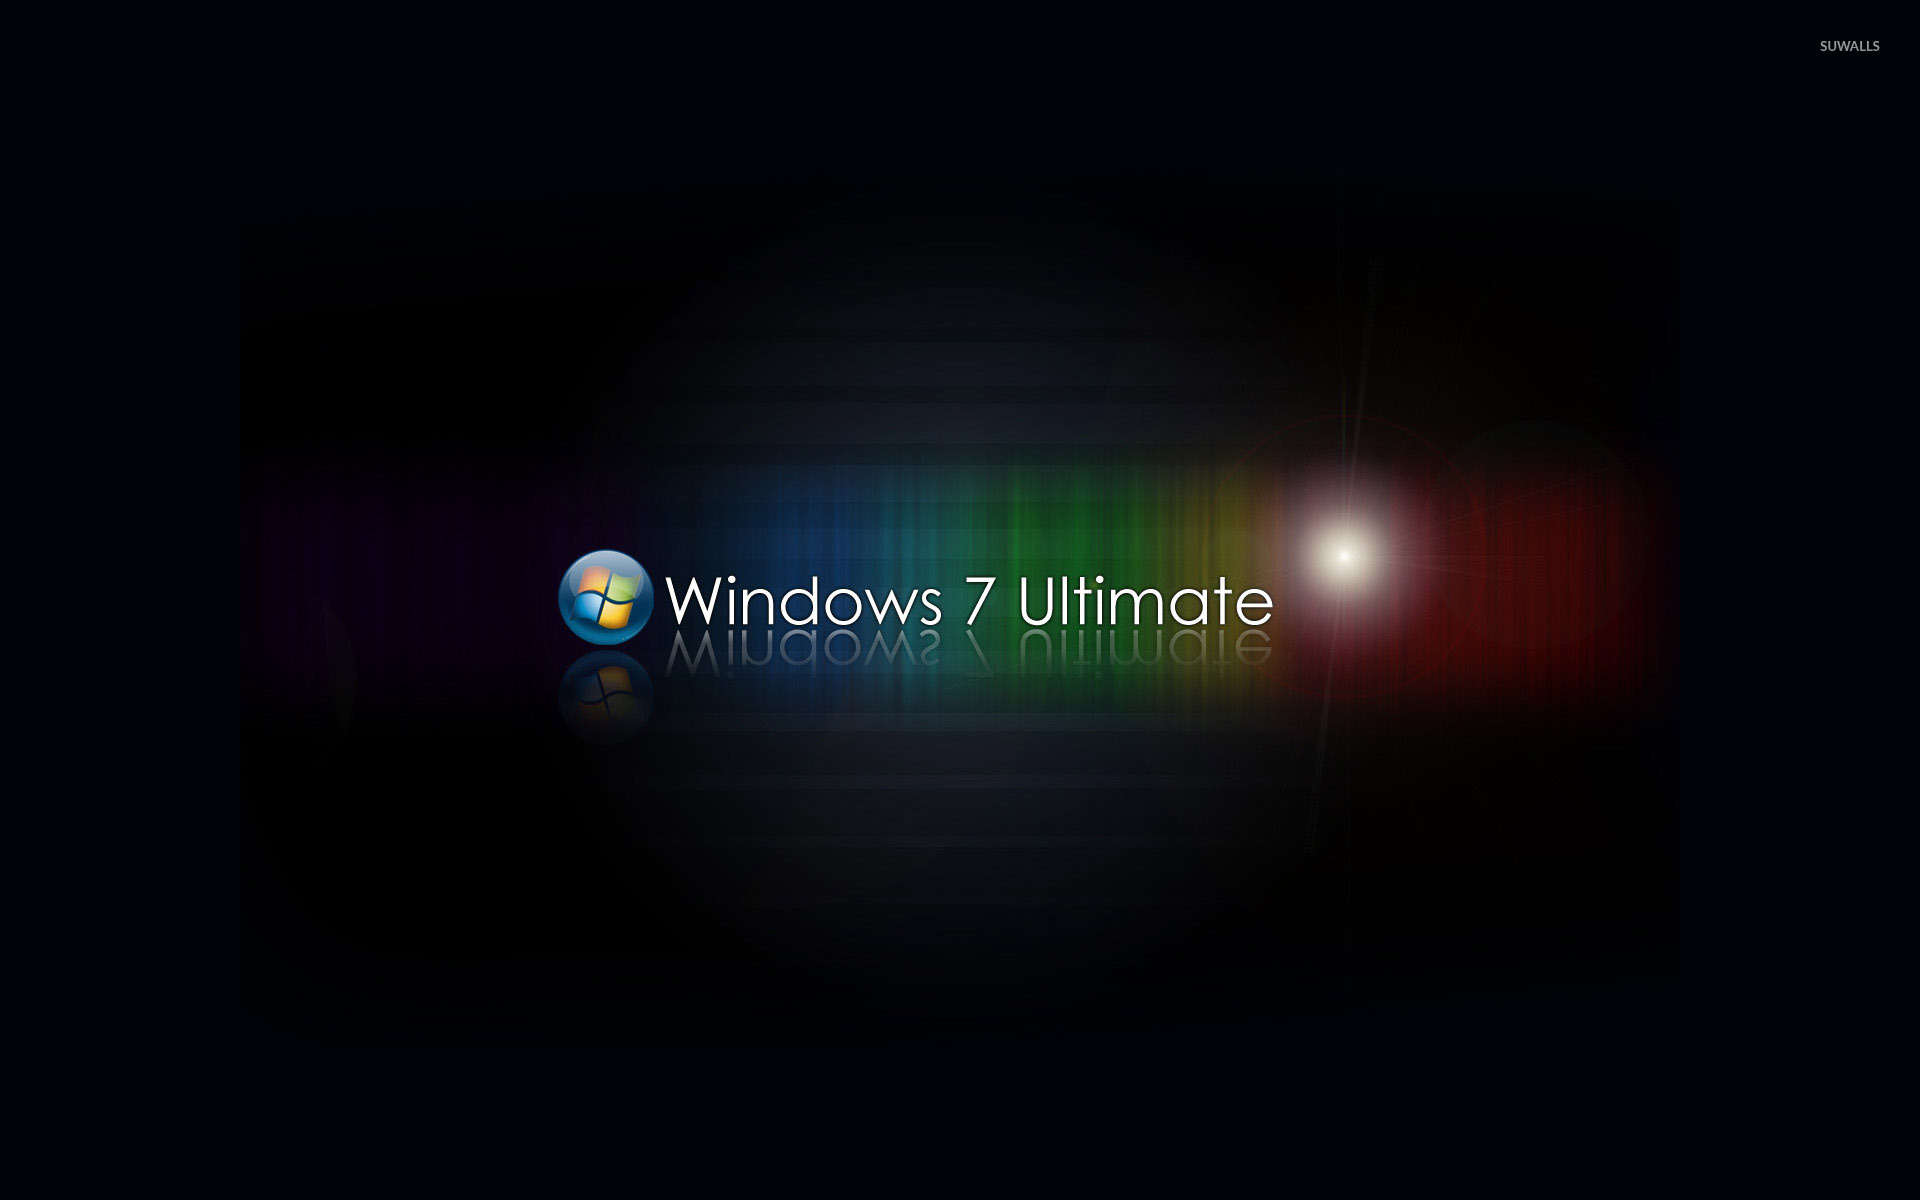 46 Windows 7 Ultimate Wallpaper 1280x800 On Wallpapersafari